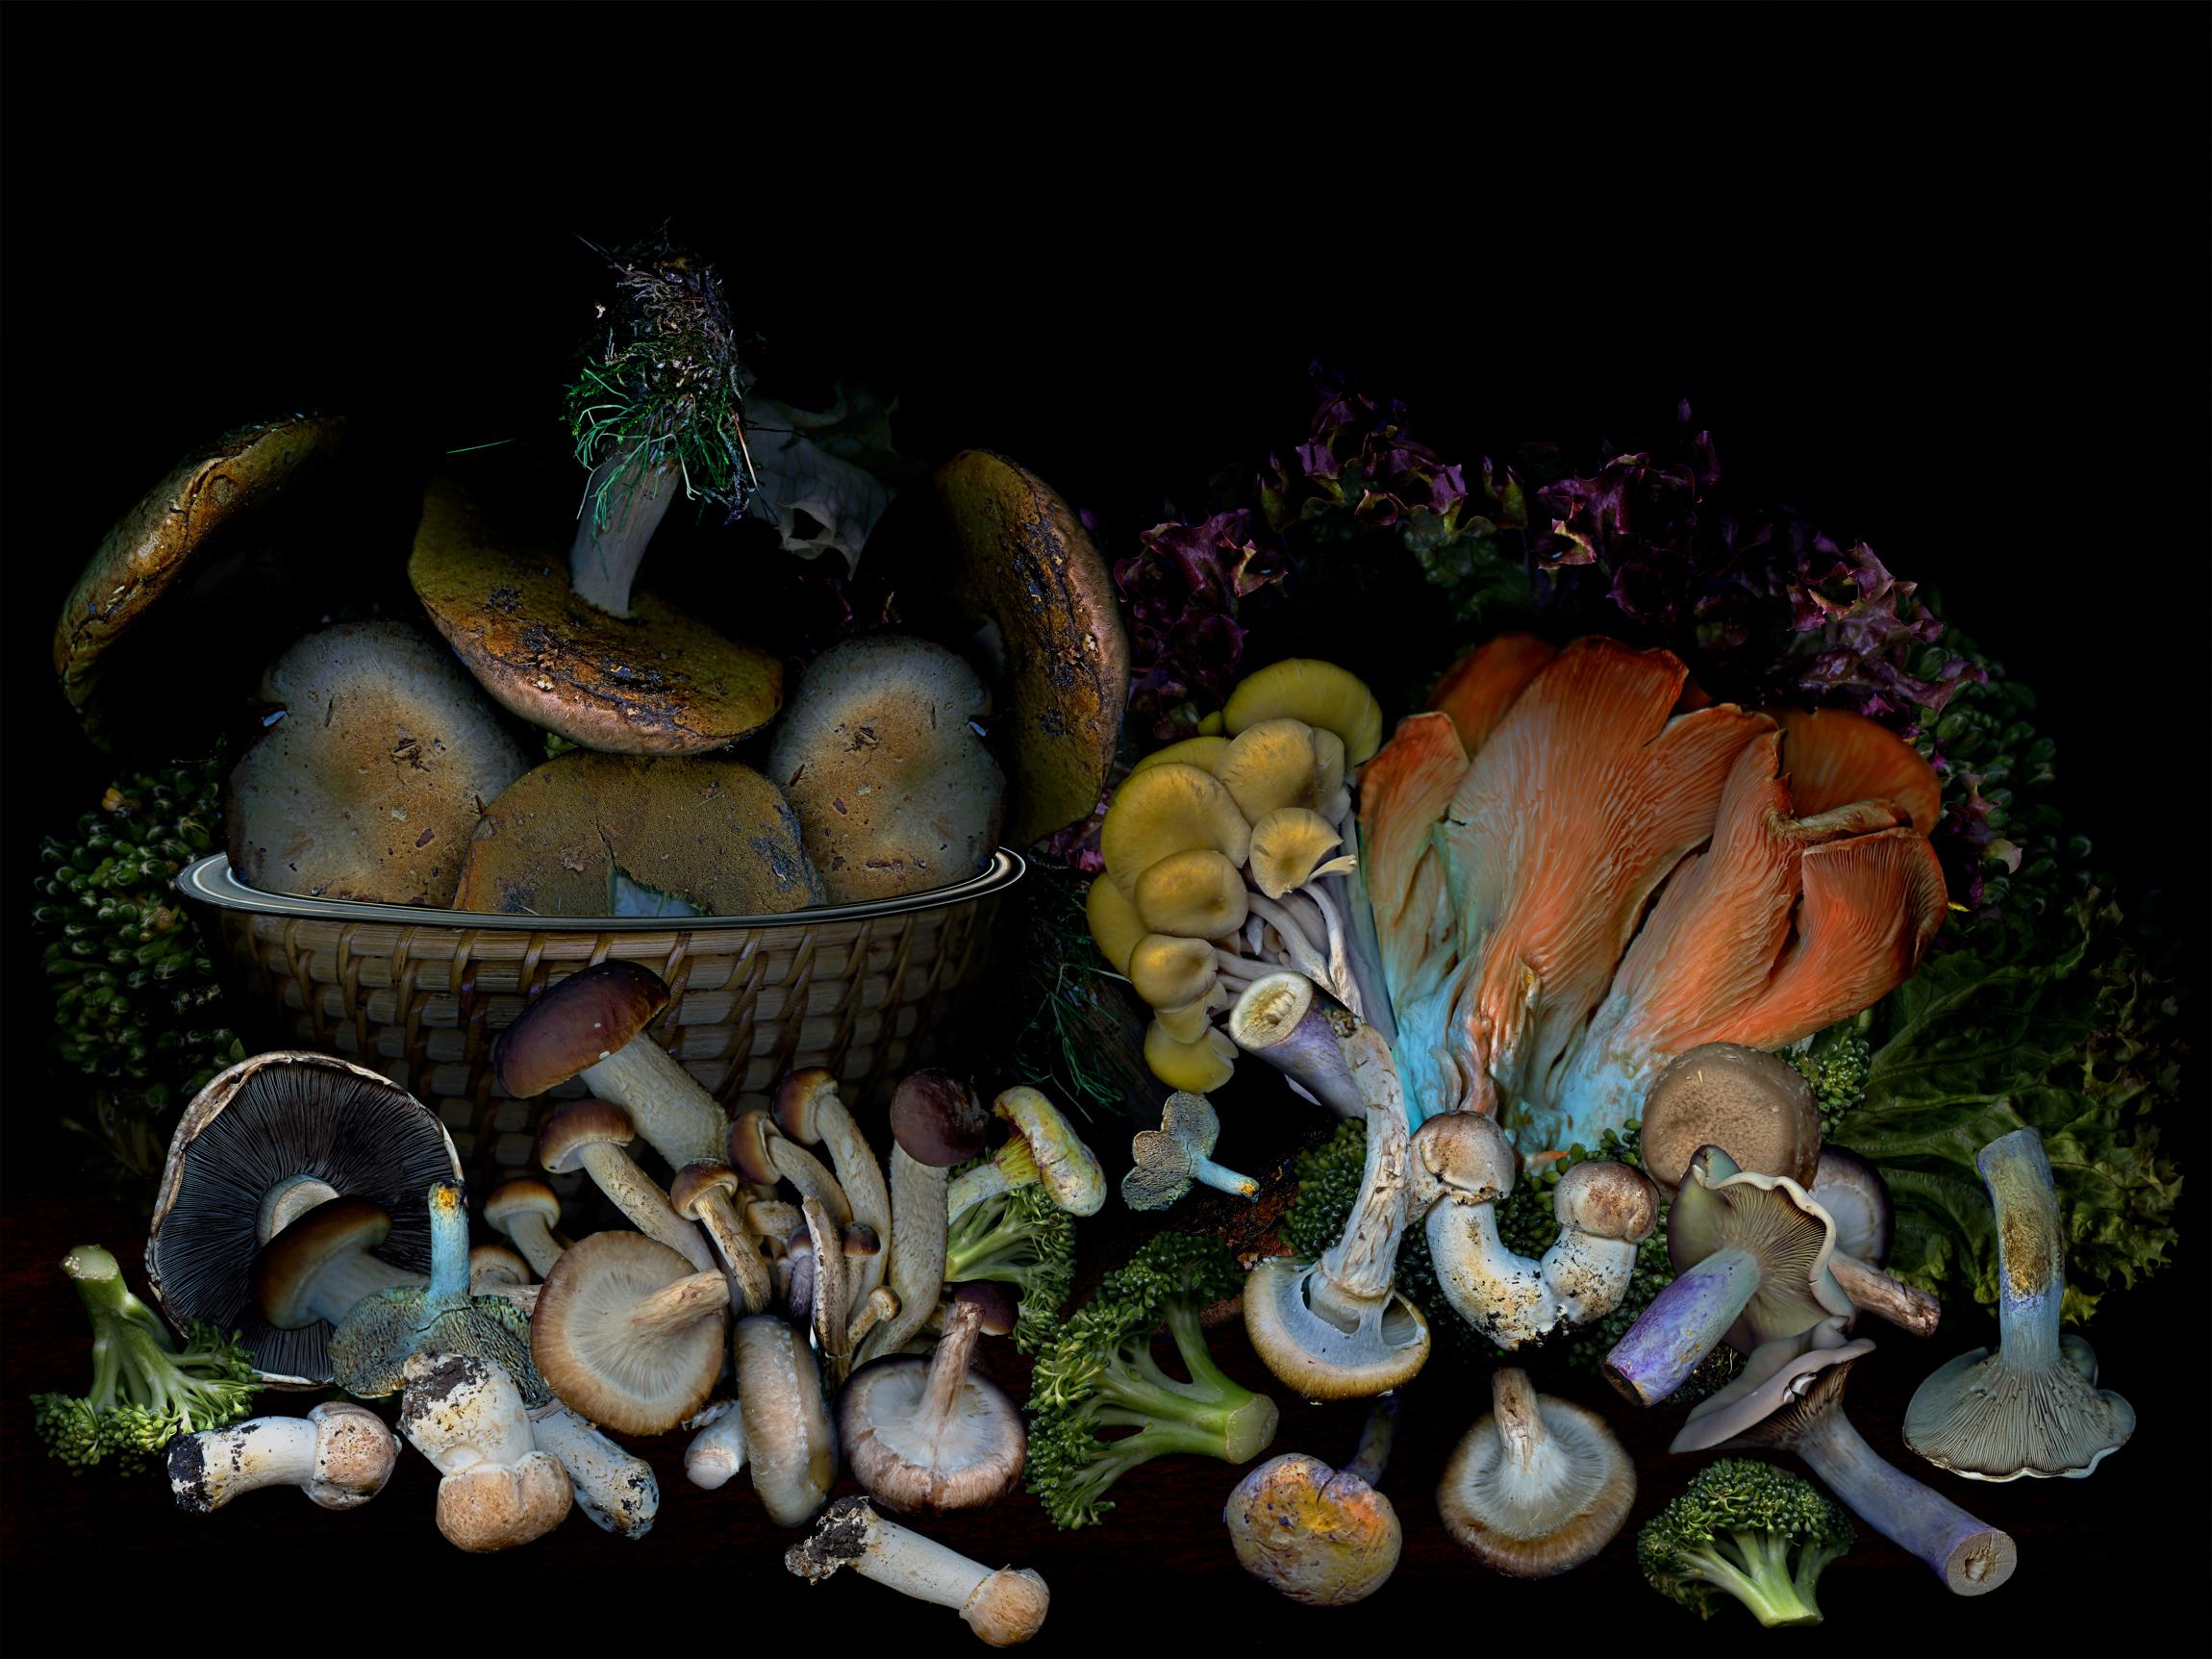 Zoltan Gerliczki Still-Life Photograph - Vegetables from my garden #3 Digital Collage Color Photograph